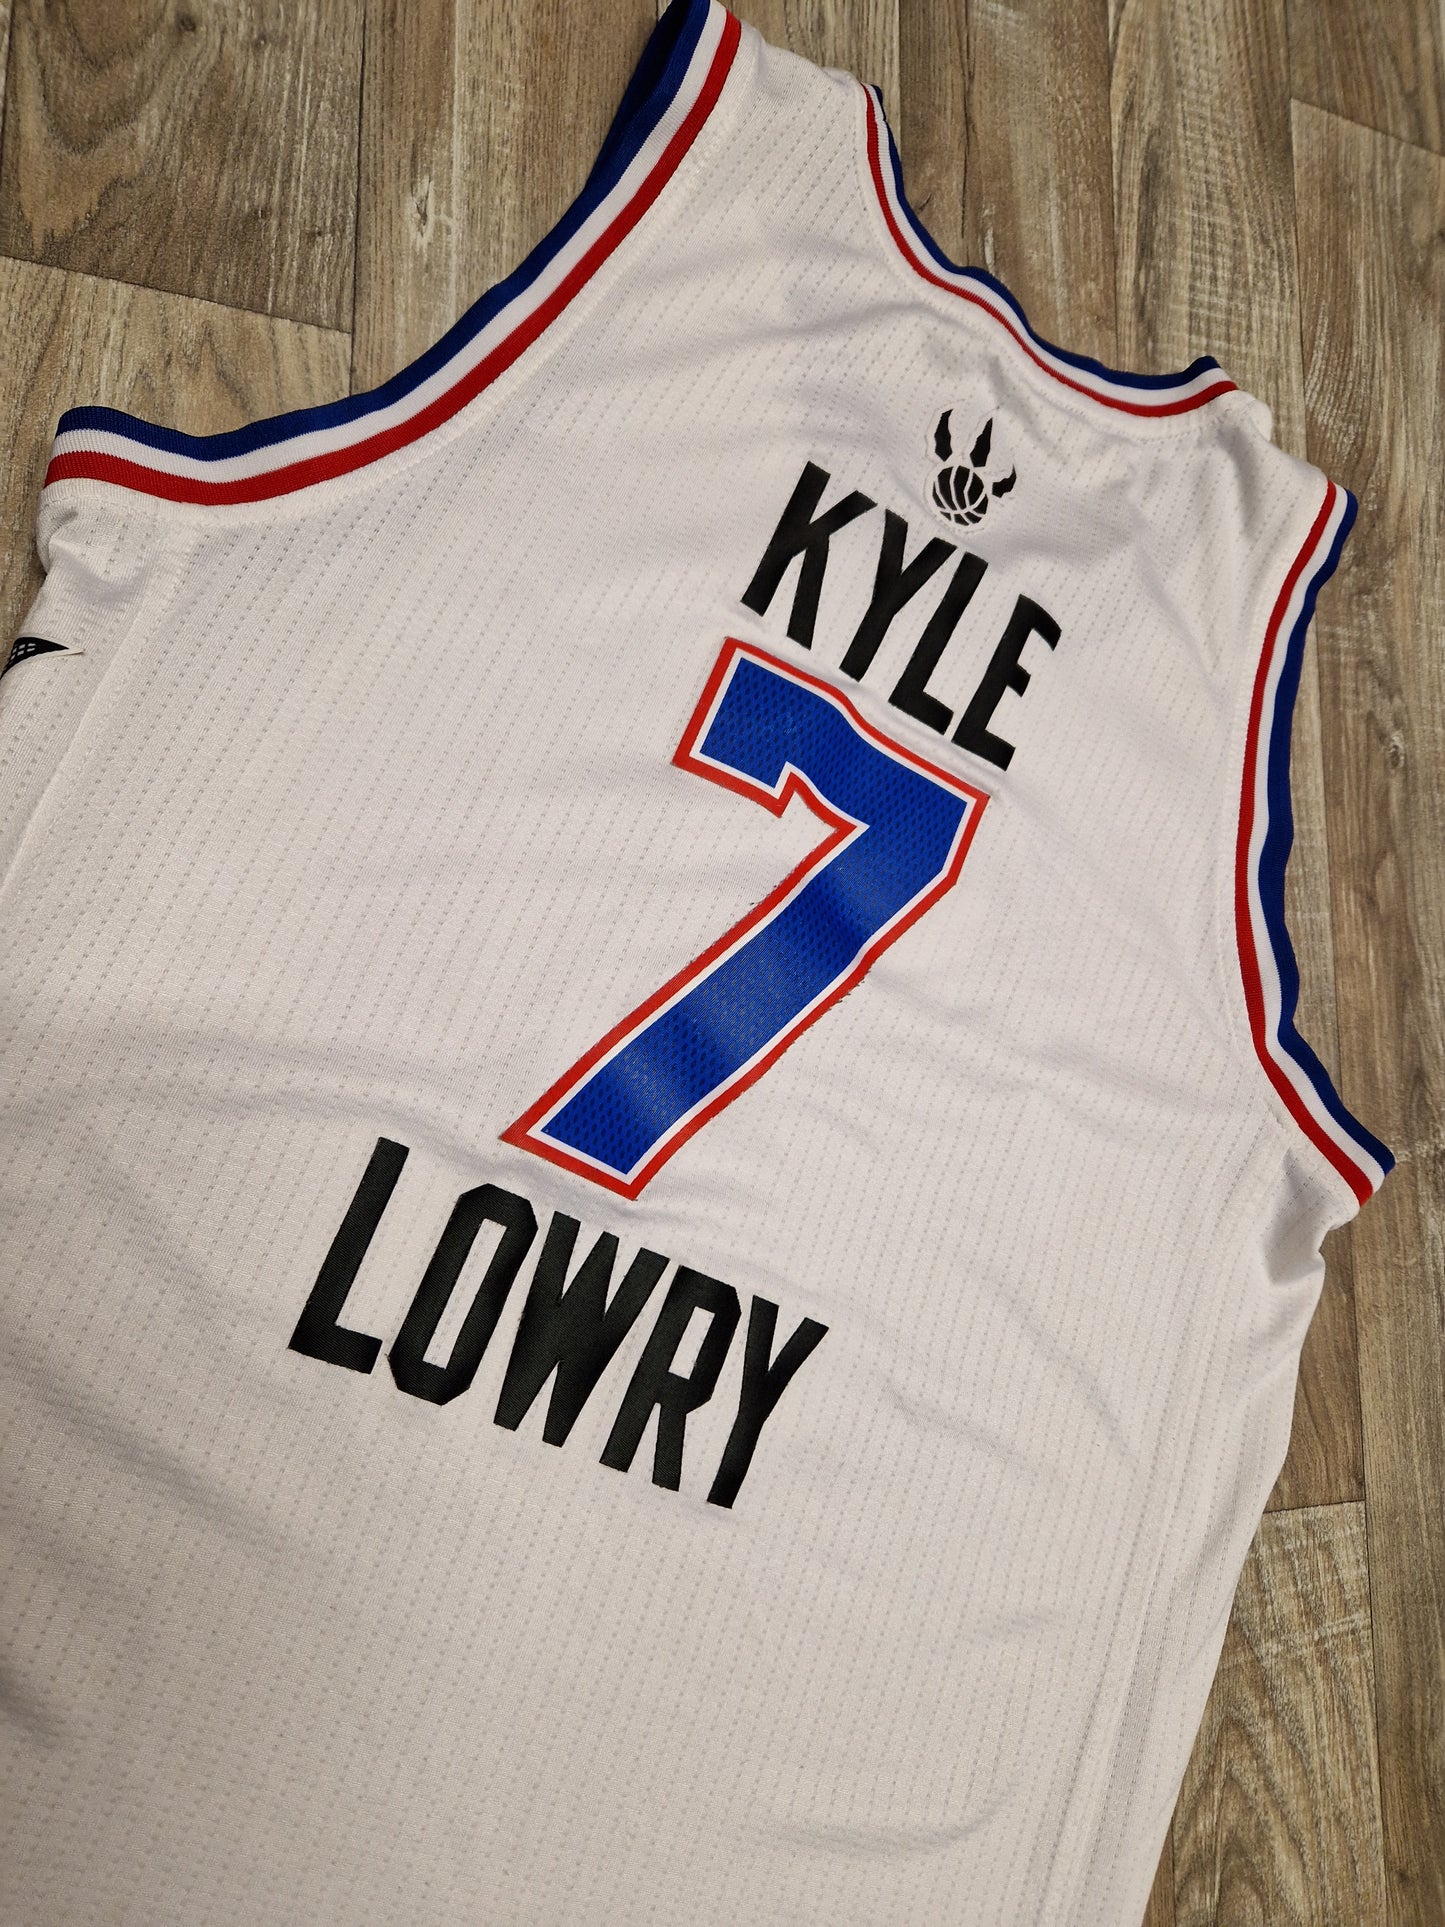 Kyle Lowry NBA All Star 2015 Jersey Size Medium